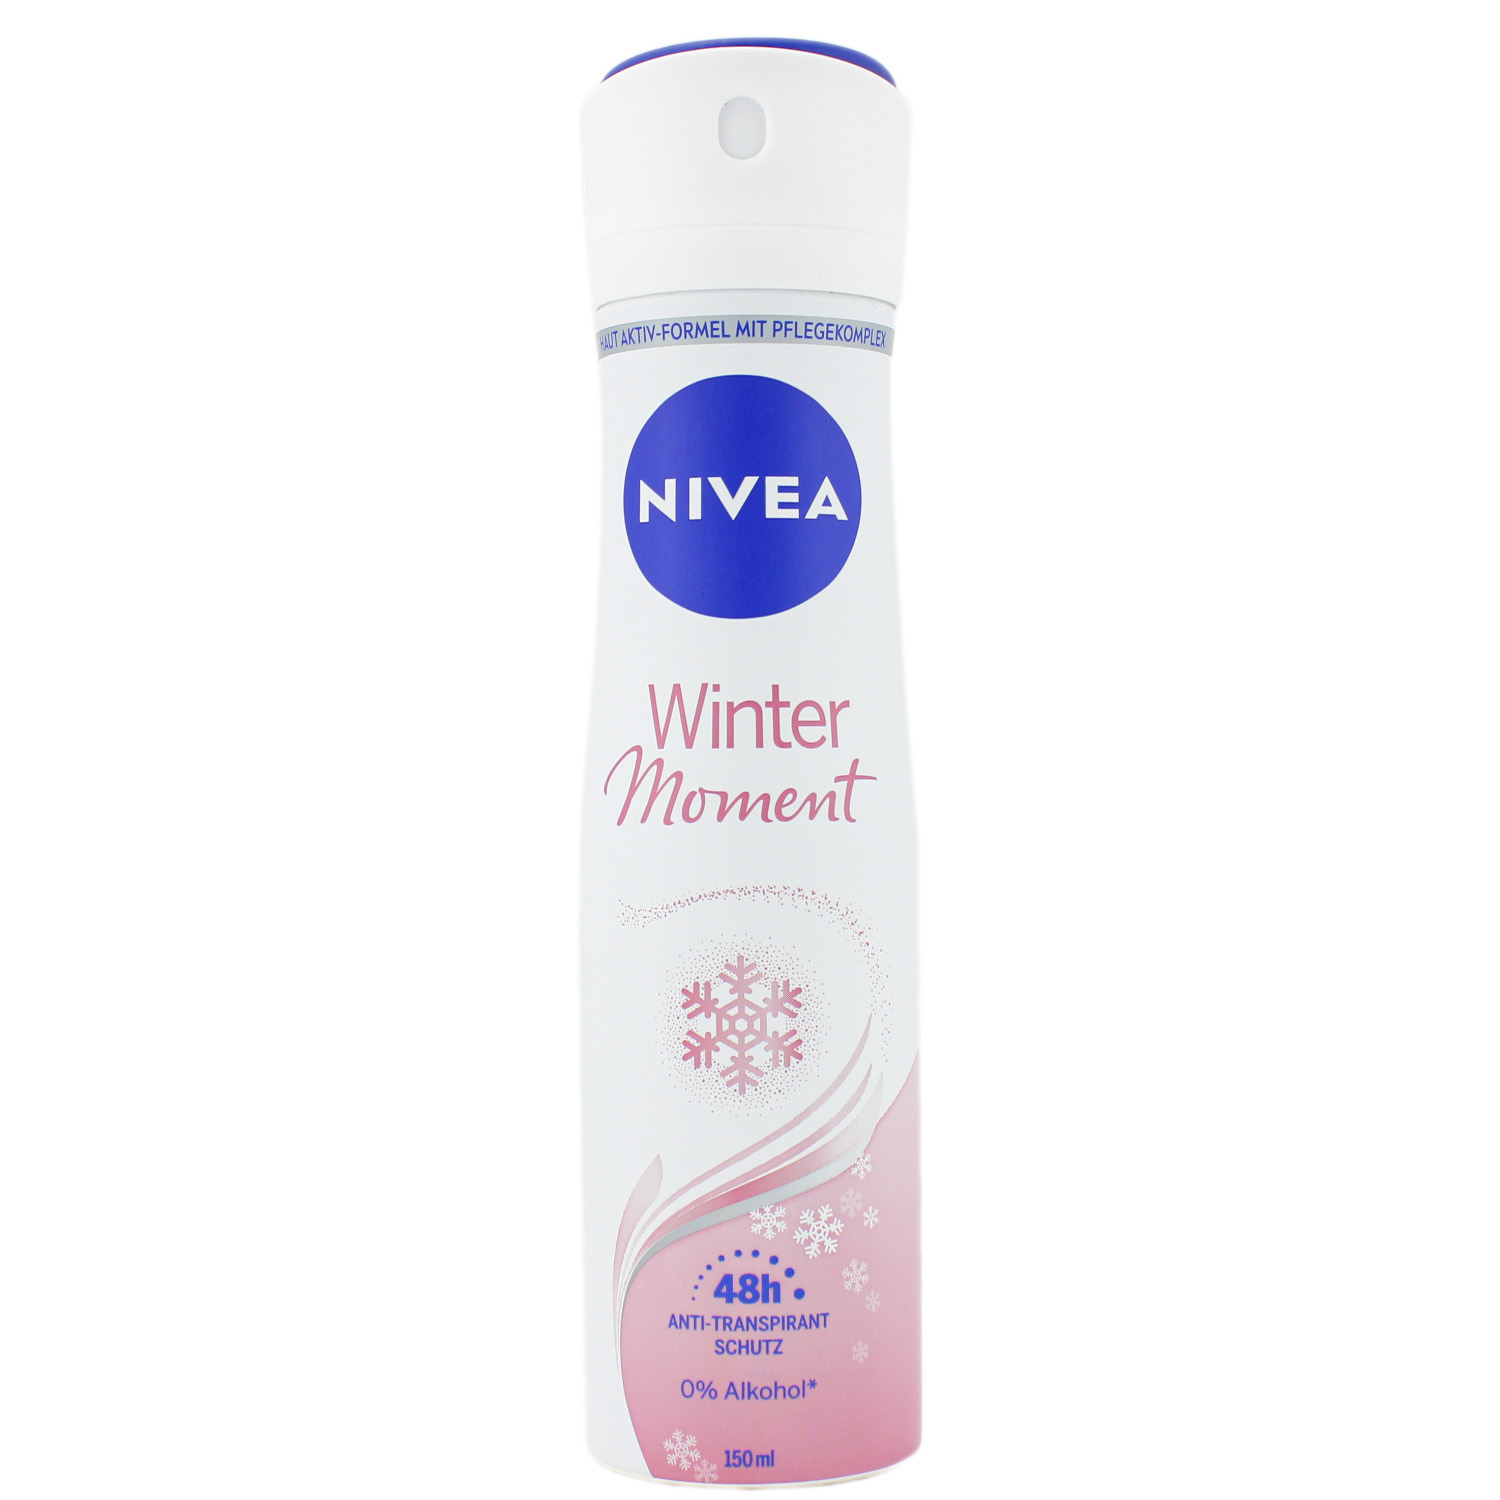 Nivea Winter Moment 48H Deodorant Spray 150ml